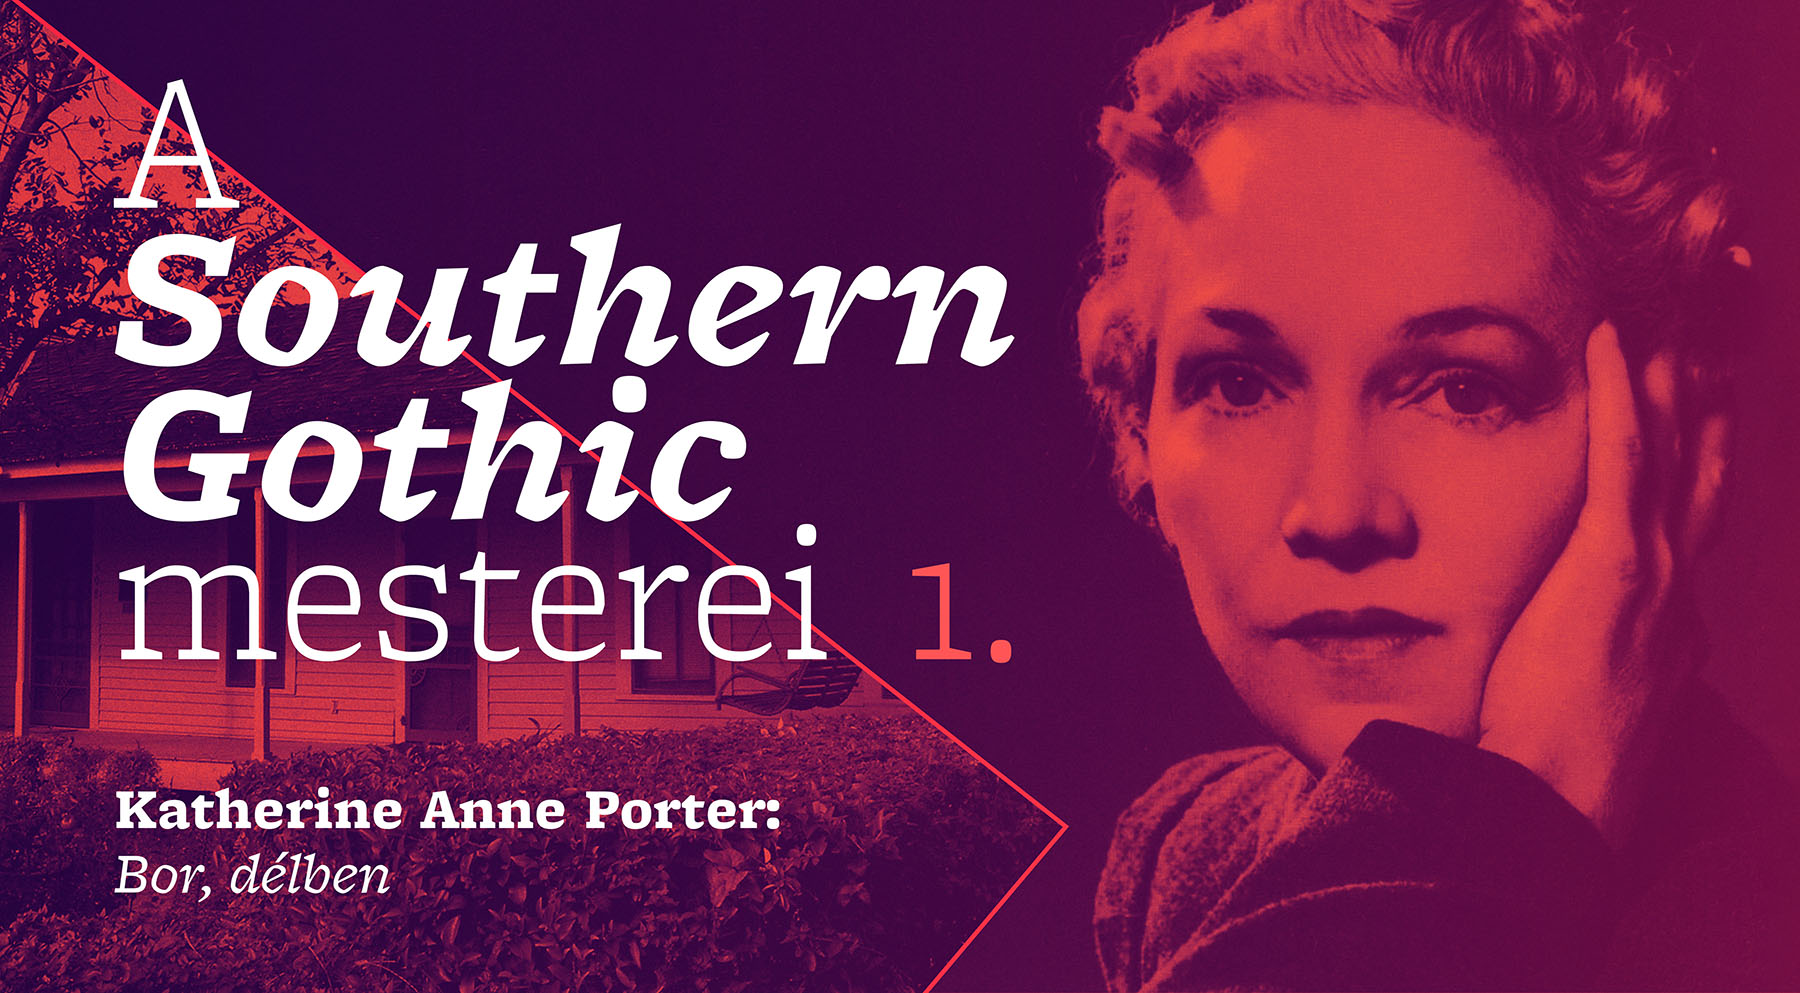 A Southern Gothic mesterei 1. (Katherine Anne Porter: Bor, délben)